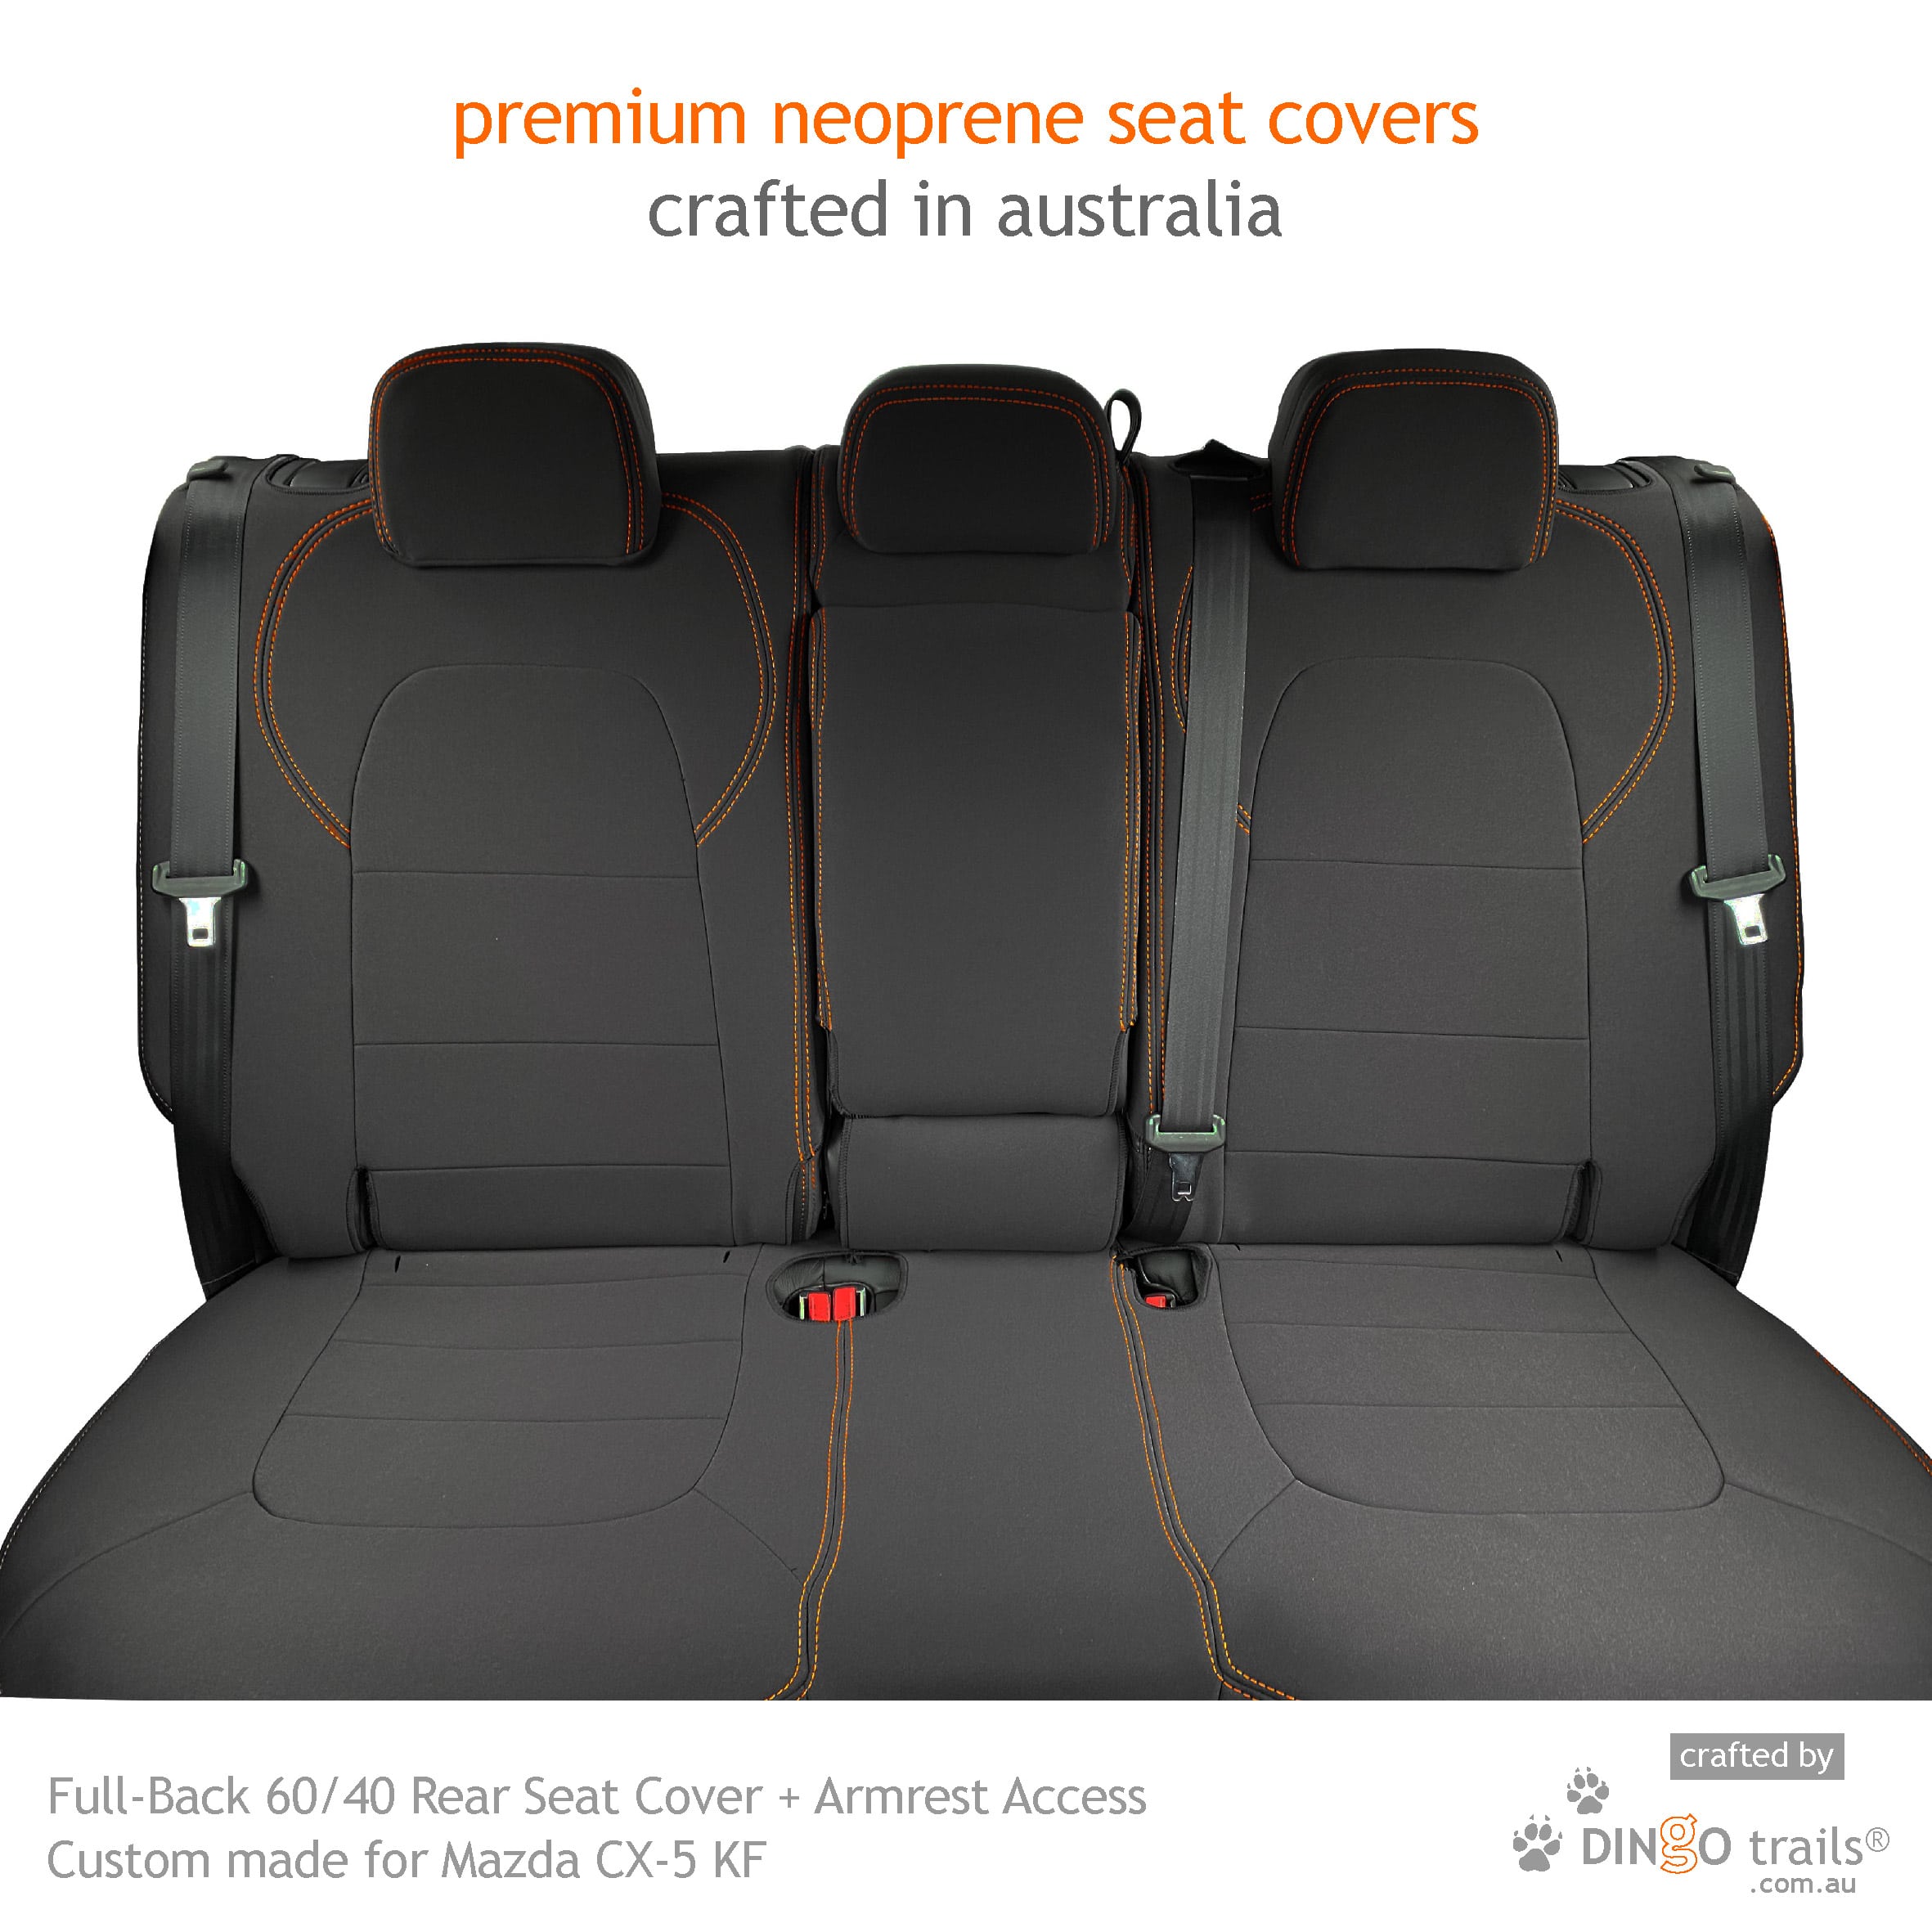 Full Back Rear Seat Cover Armrest For Mazda Cx 5 Mc517 Ra P Dingo Trails - 2019 Mazda Cx 5 Rear Seat Cover